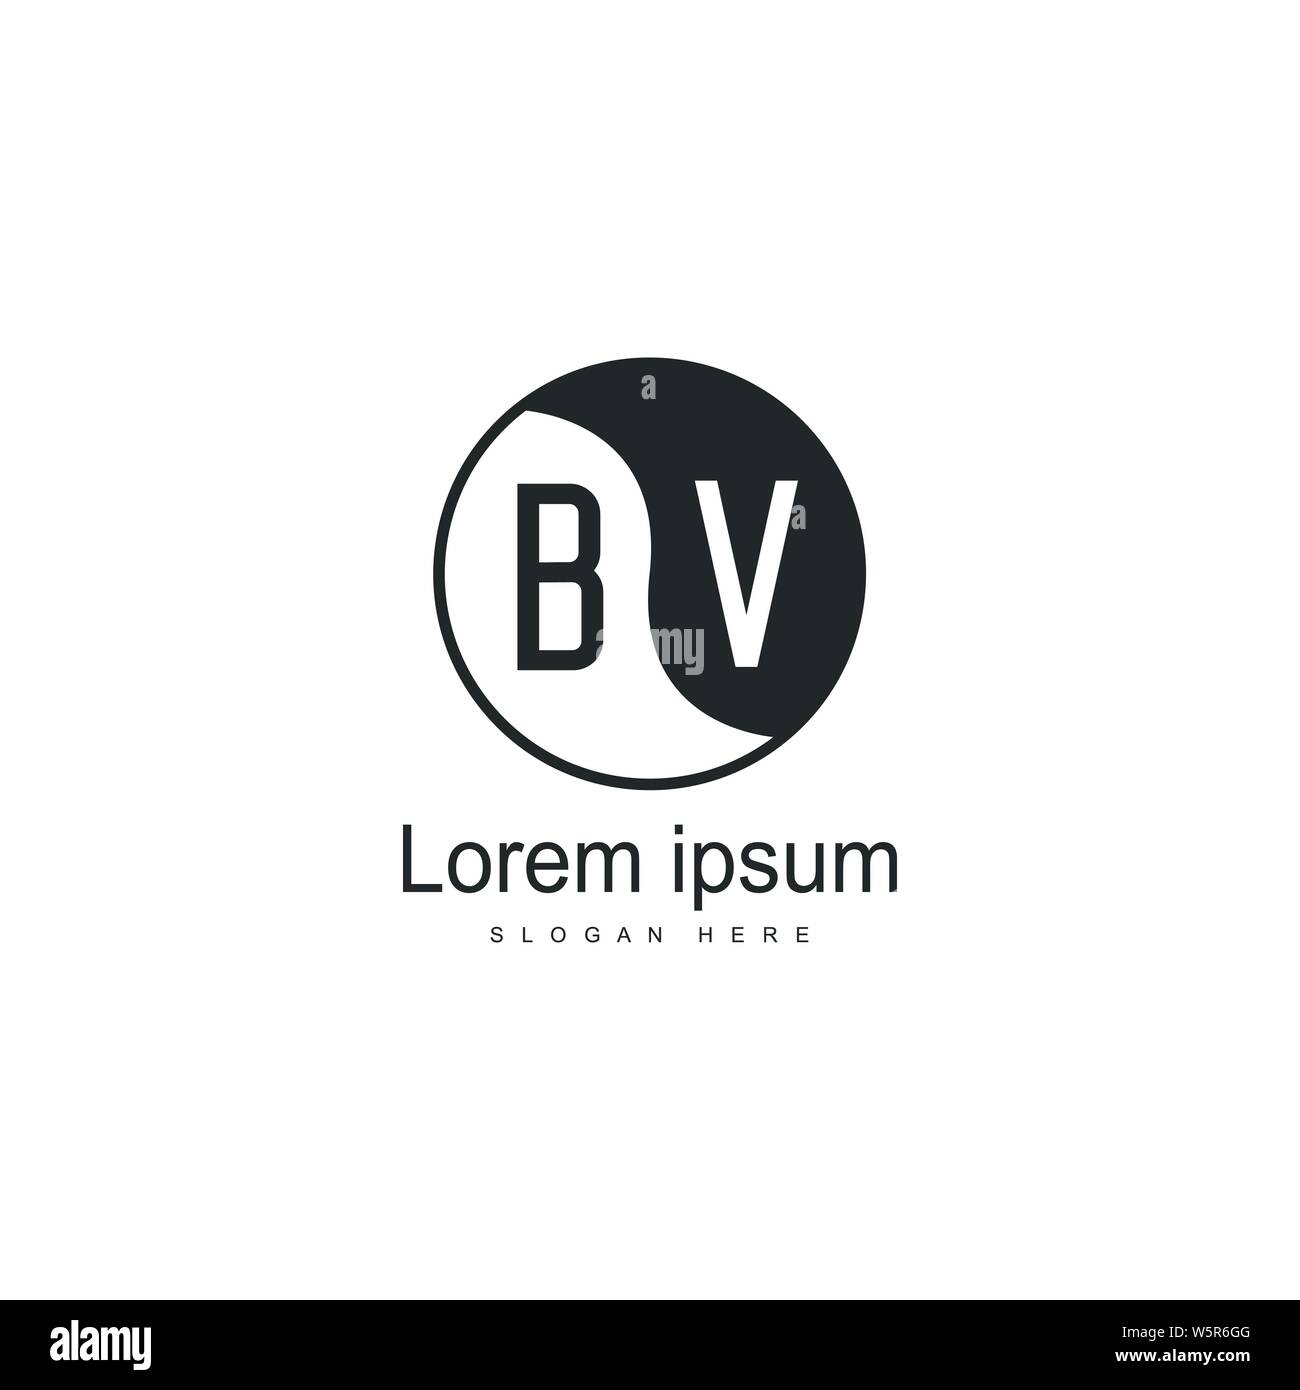 100,000 Bv logo Vector Images | Depositphotos